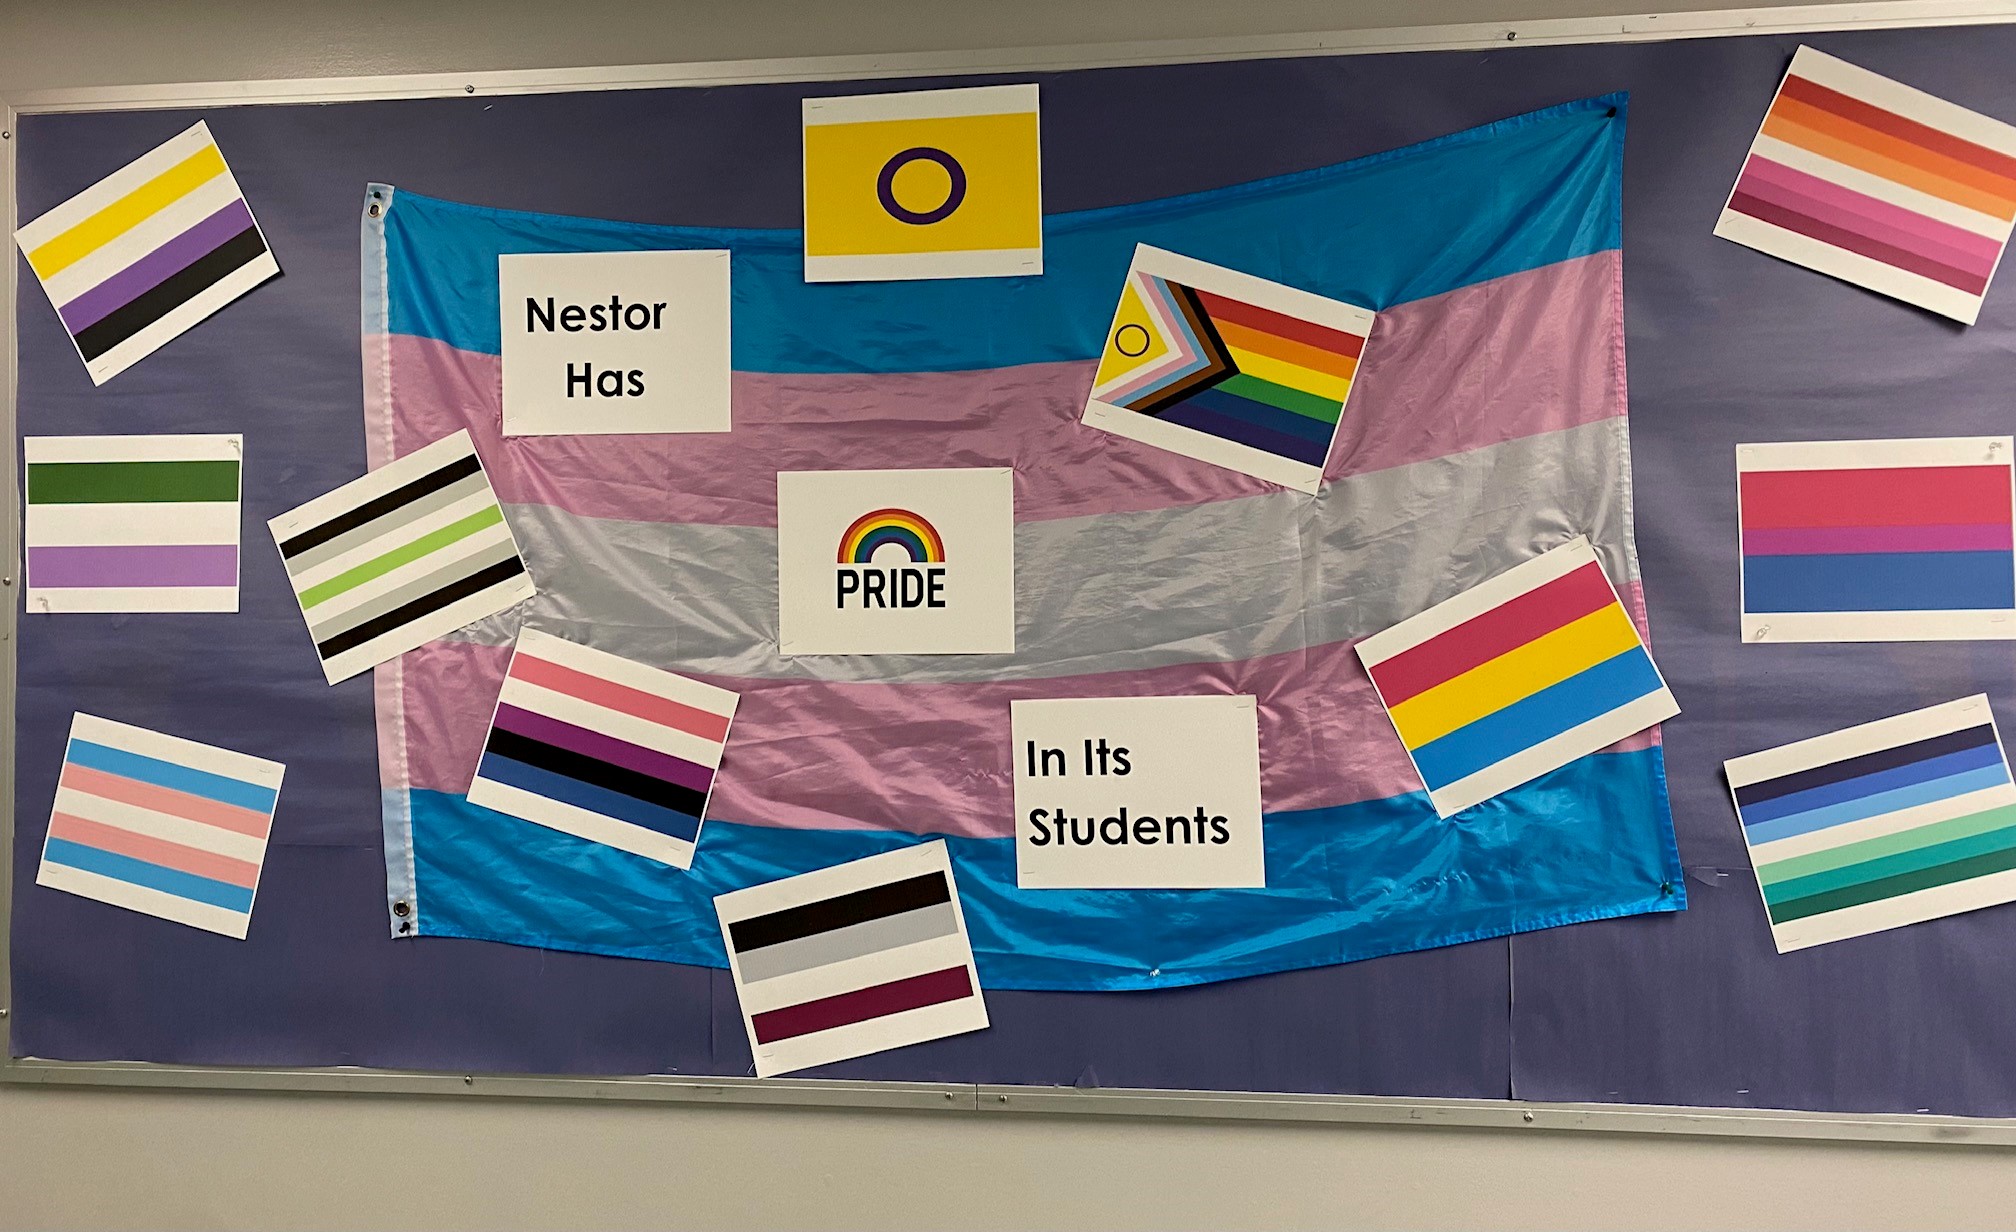 Nestor has Pride in its students